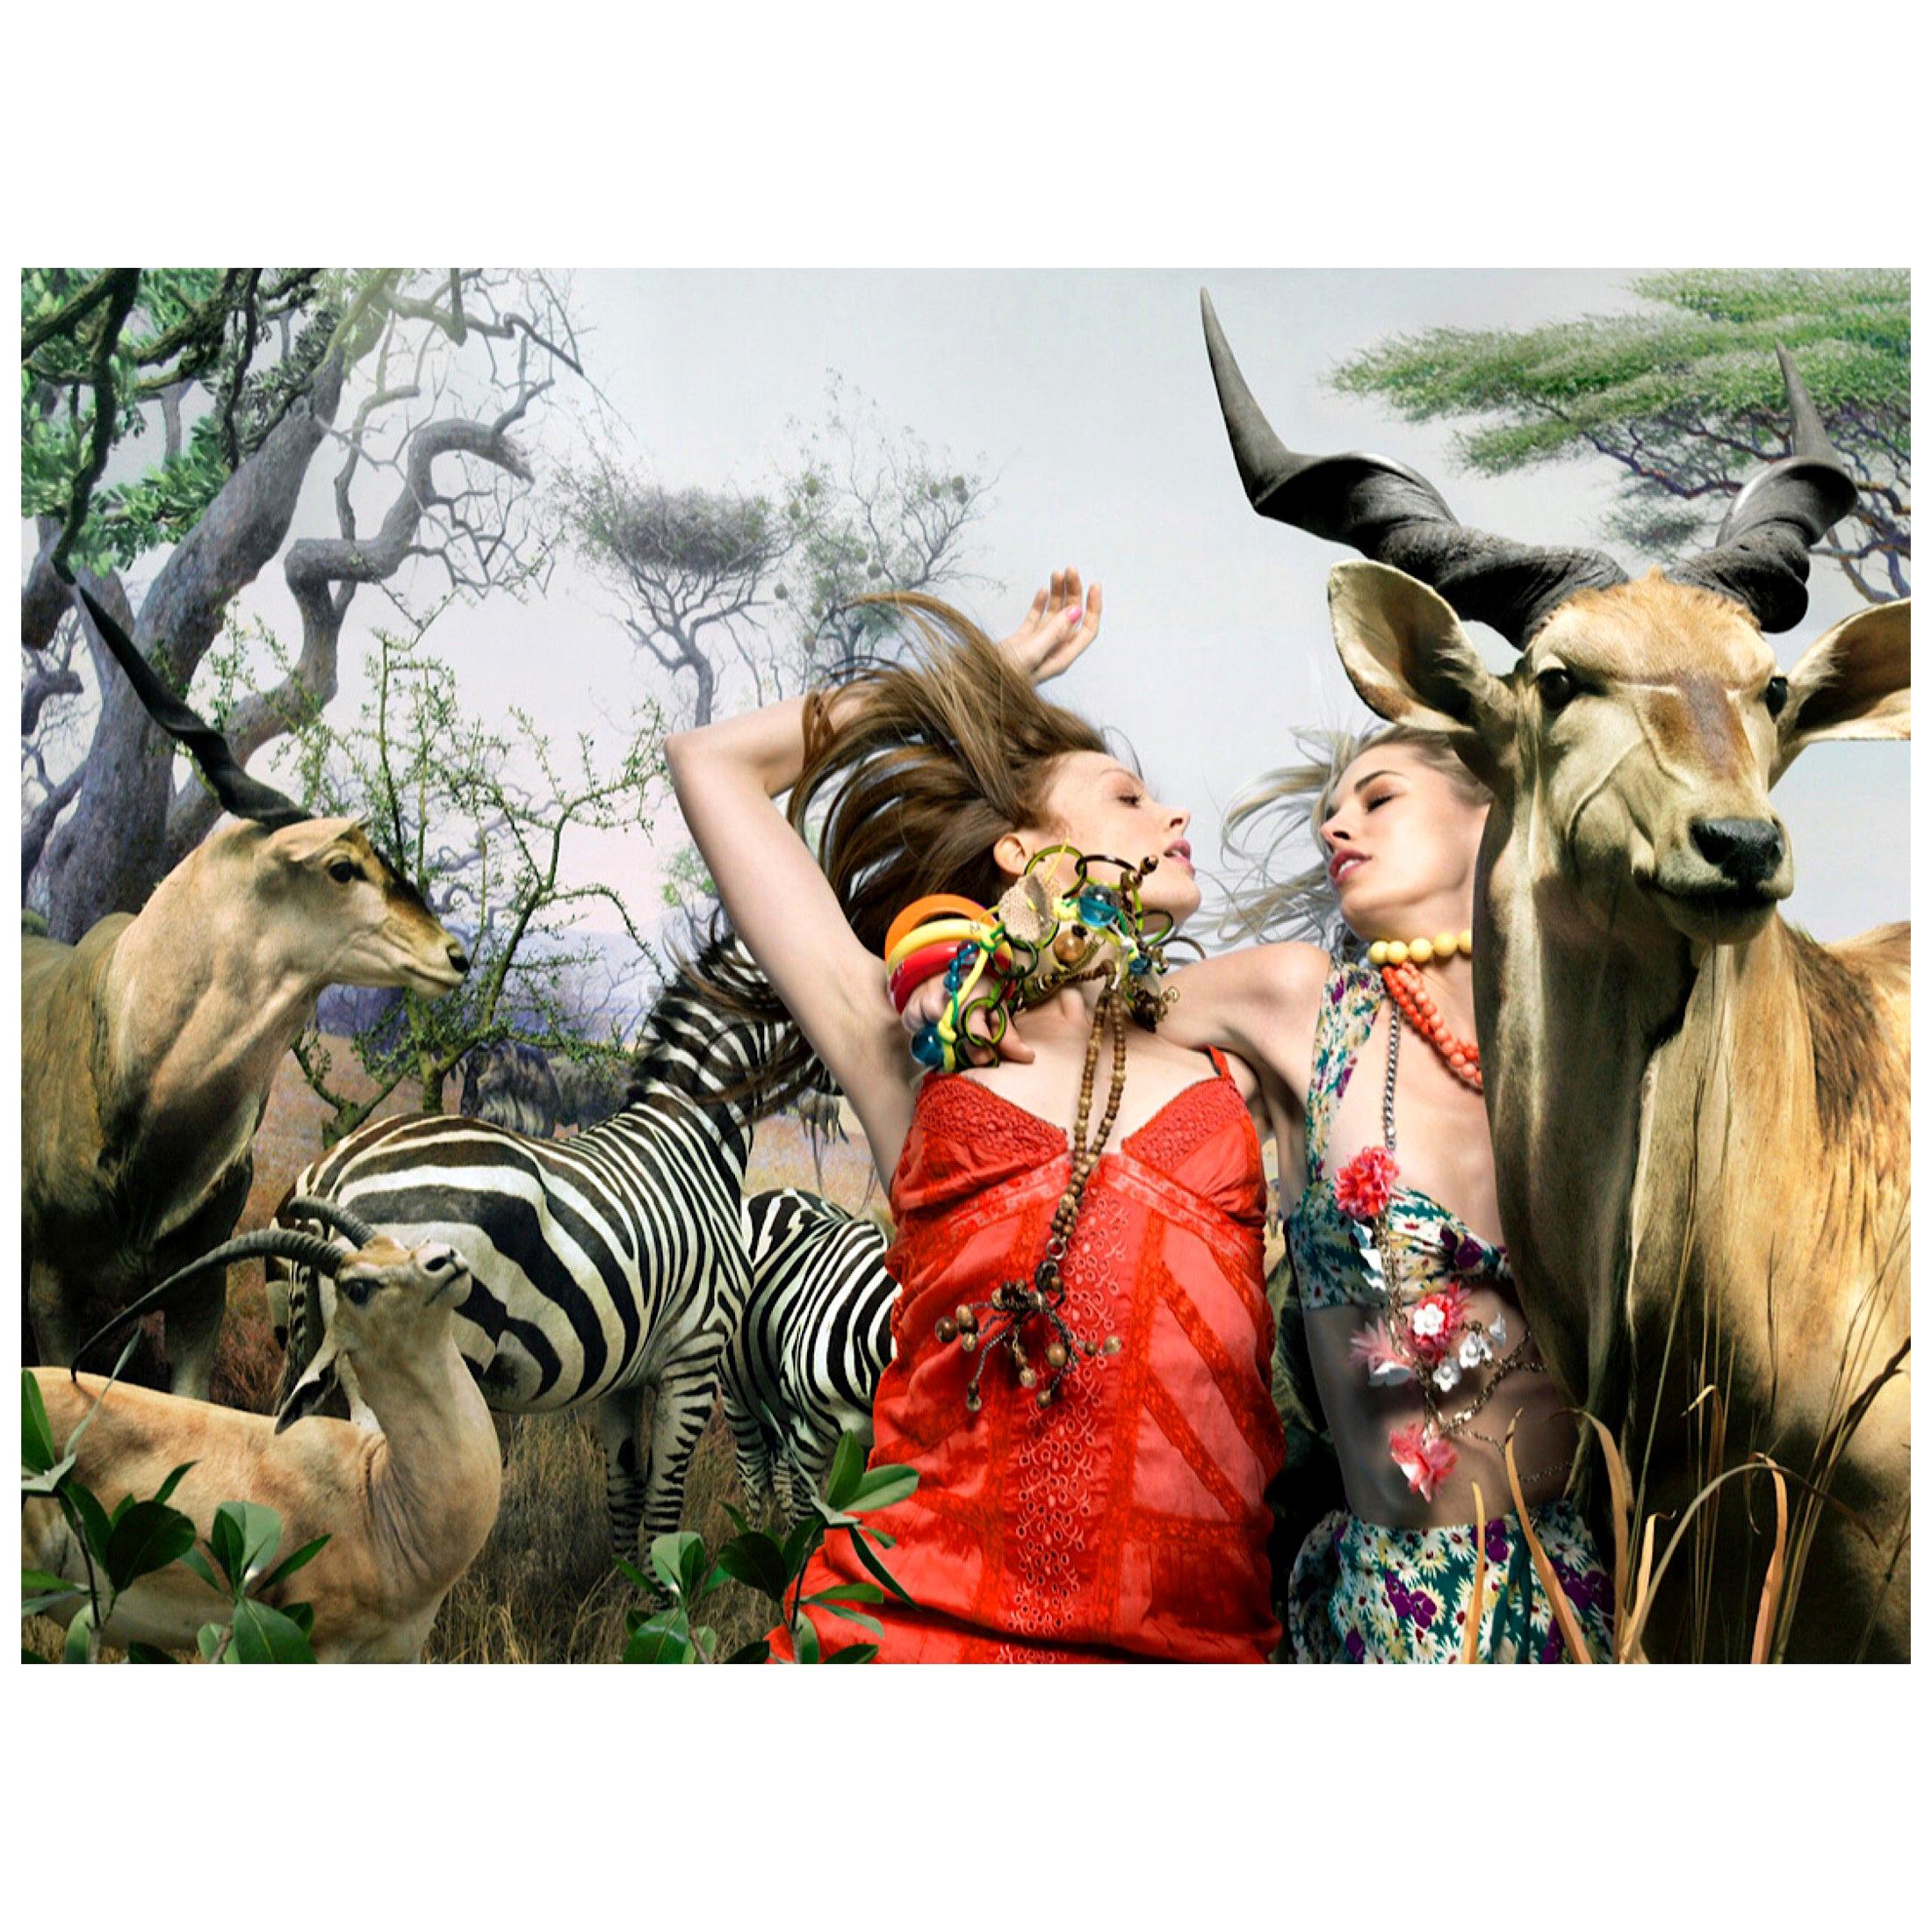 Nicola Majocchi Photograph Safari Fashion, 2001